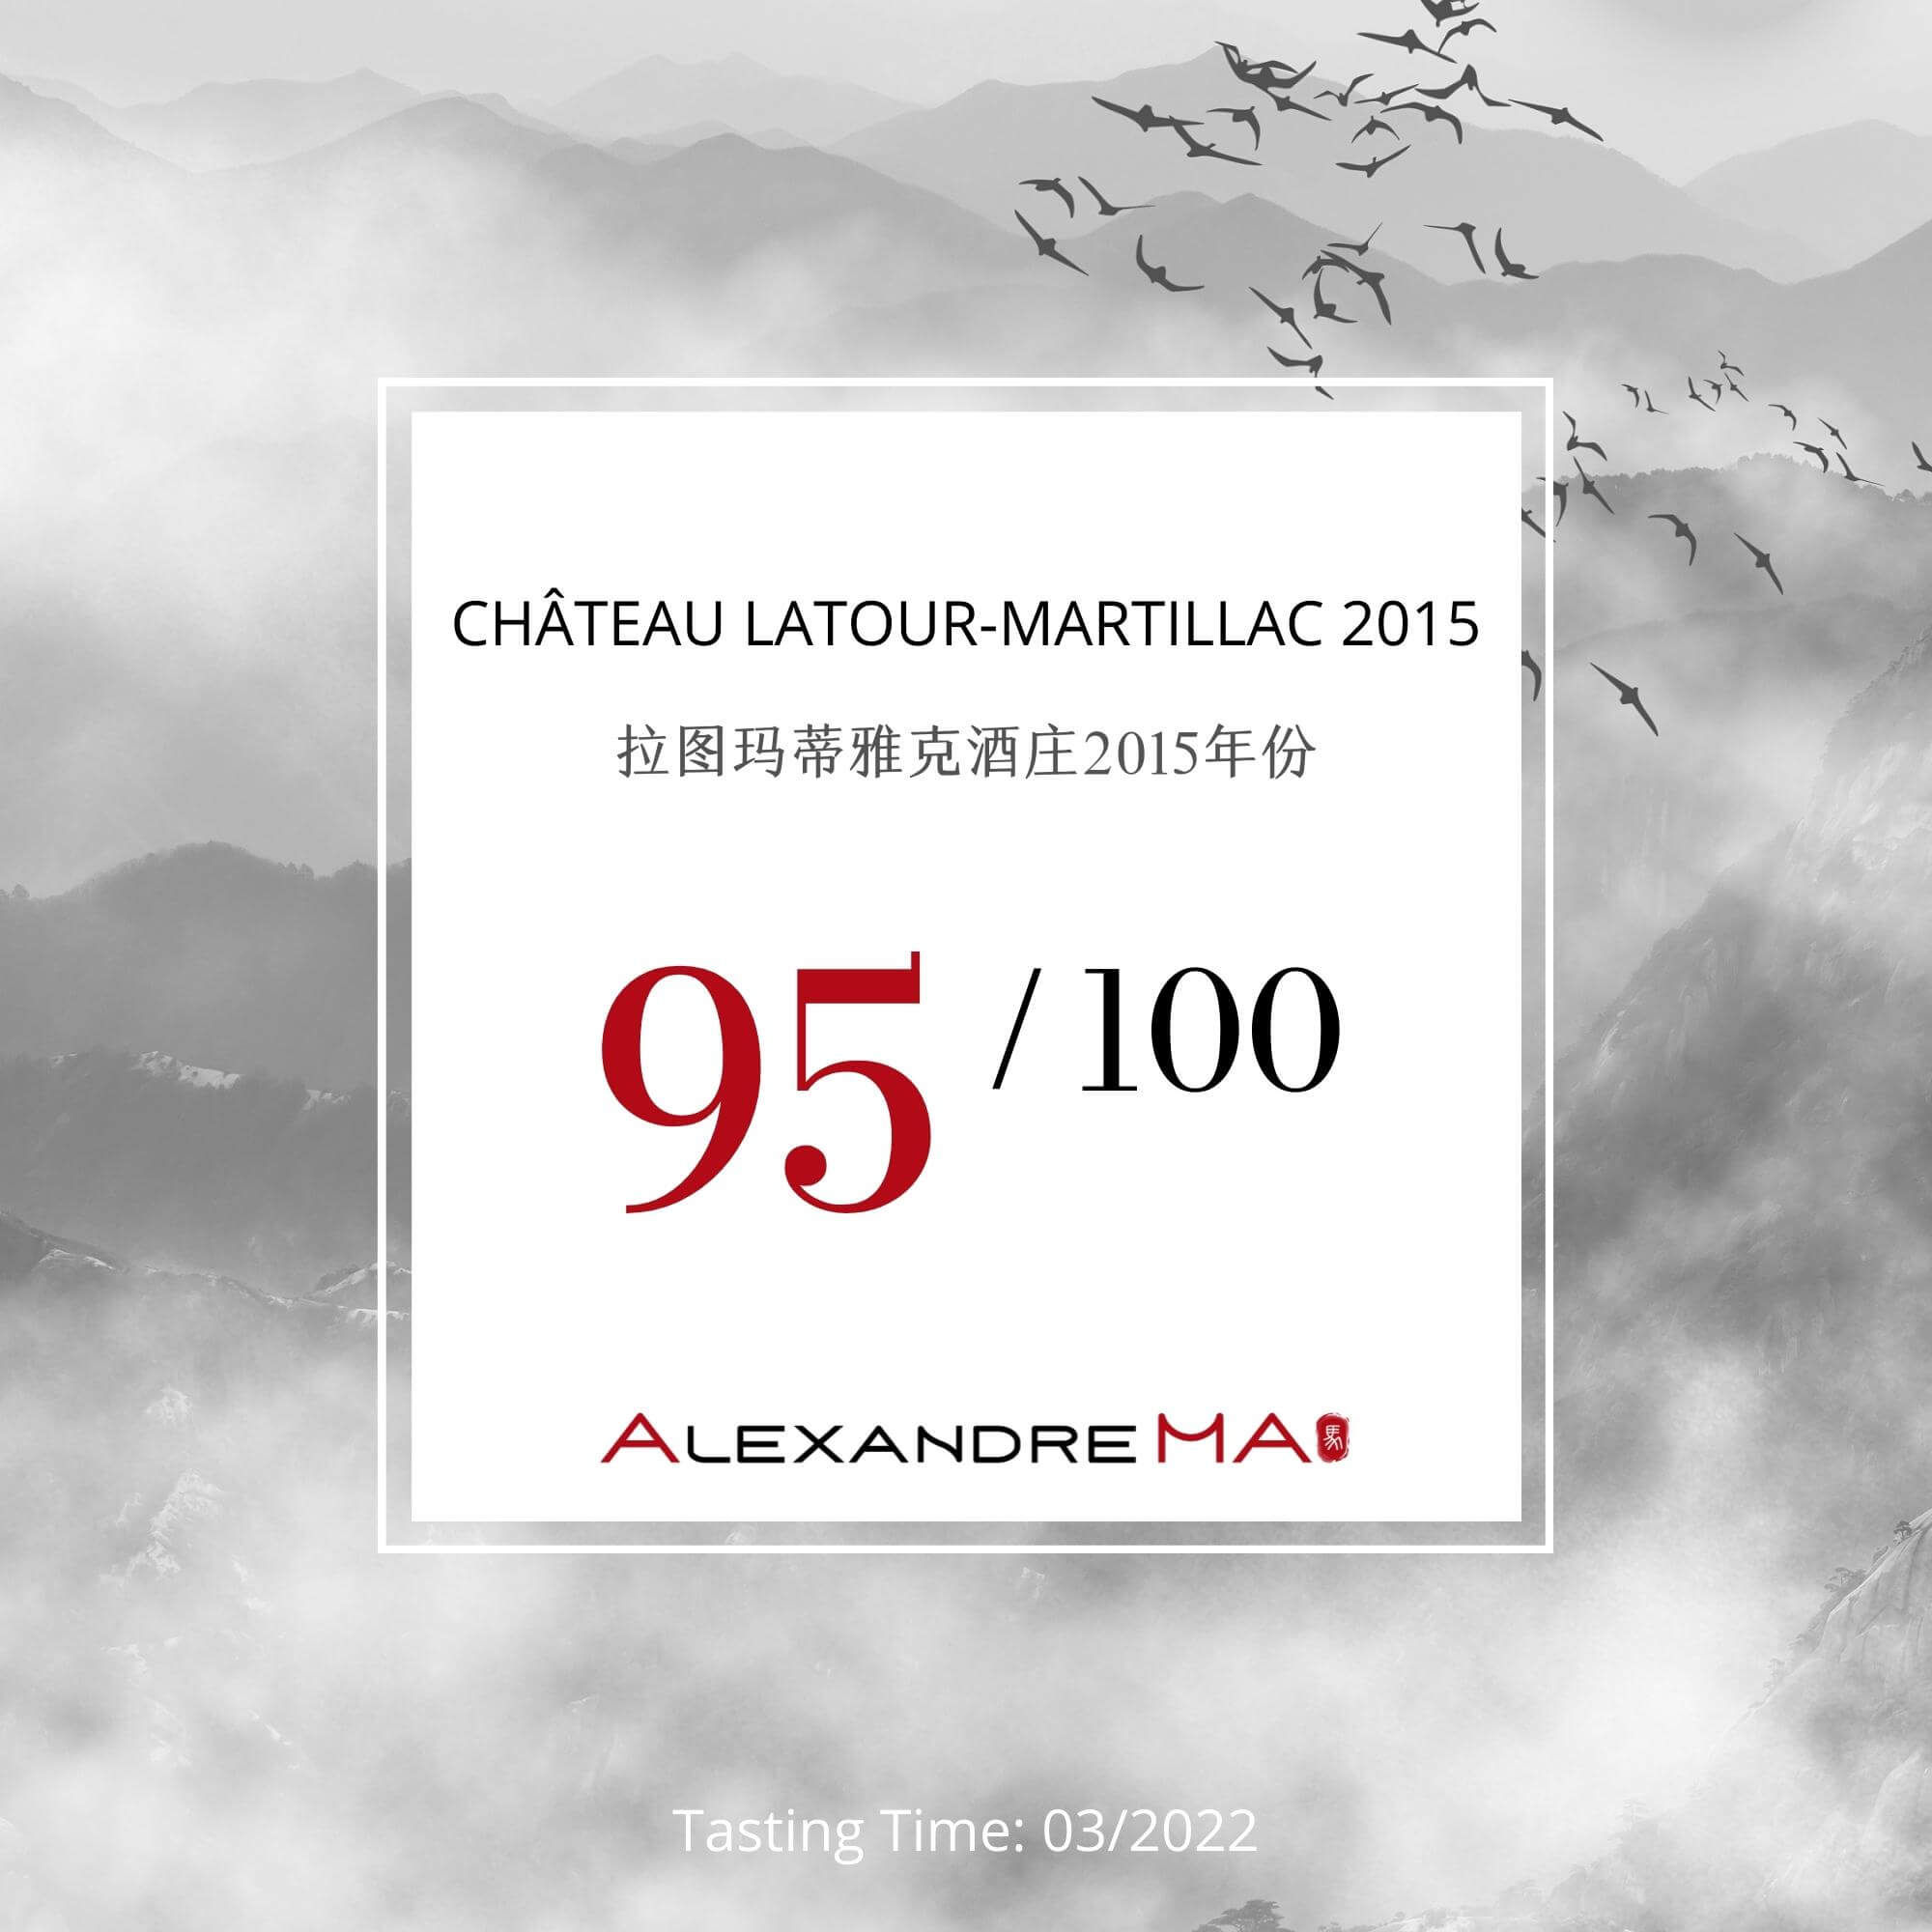 Château Latour-Martillac 2015 - Alexandre MA